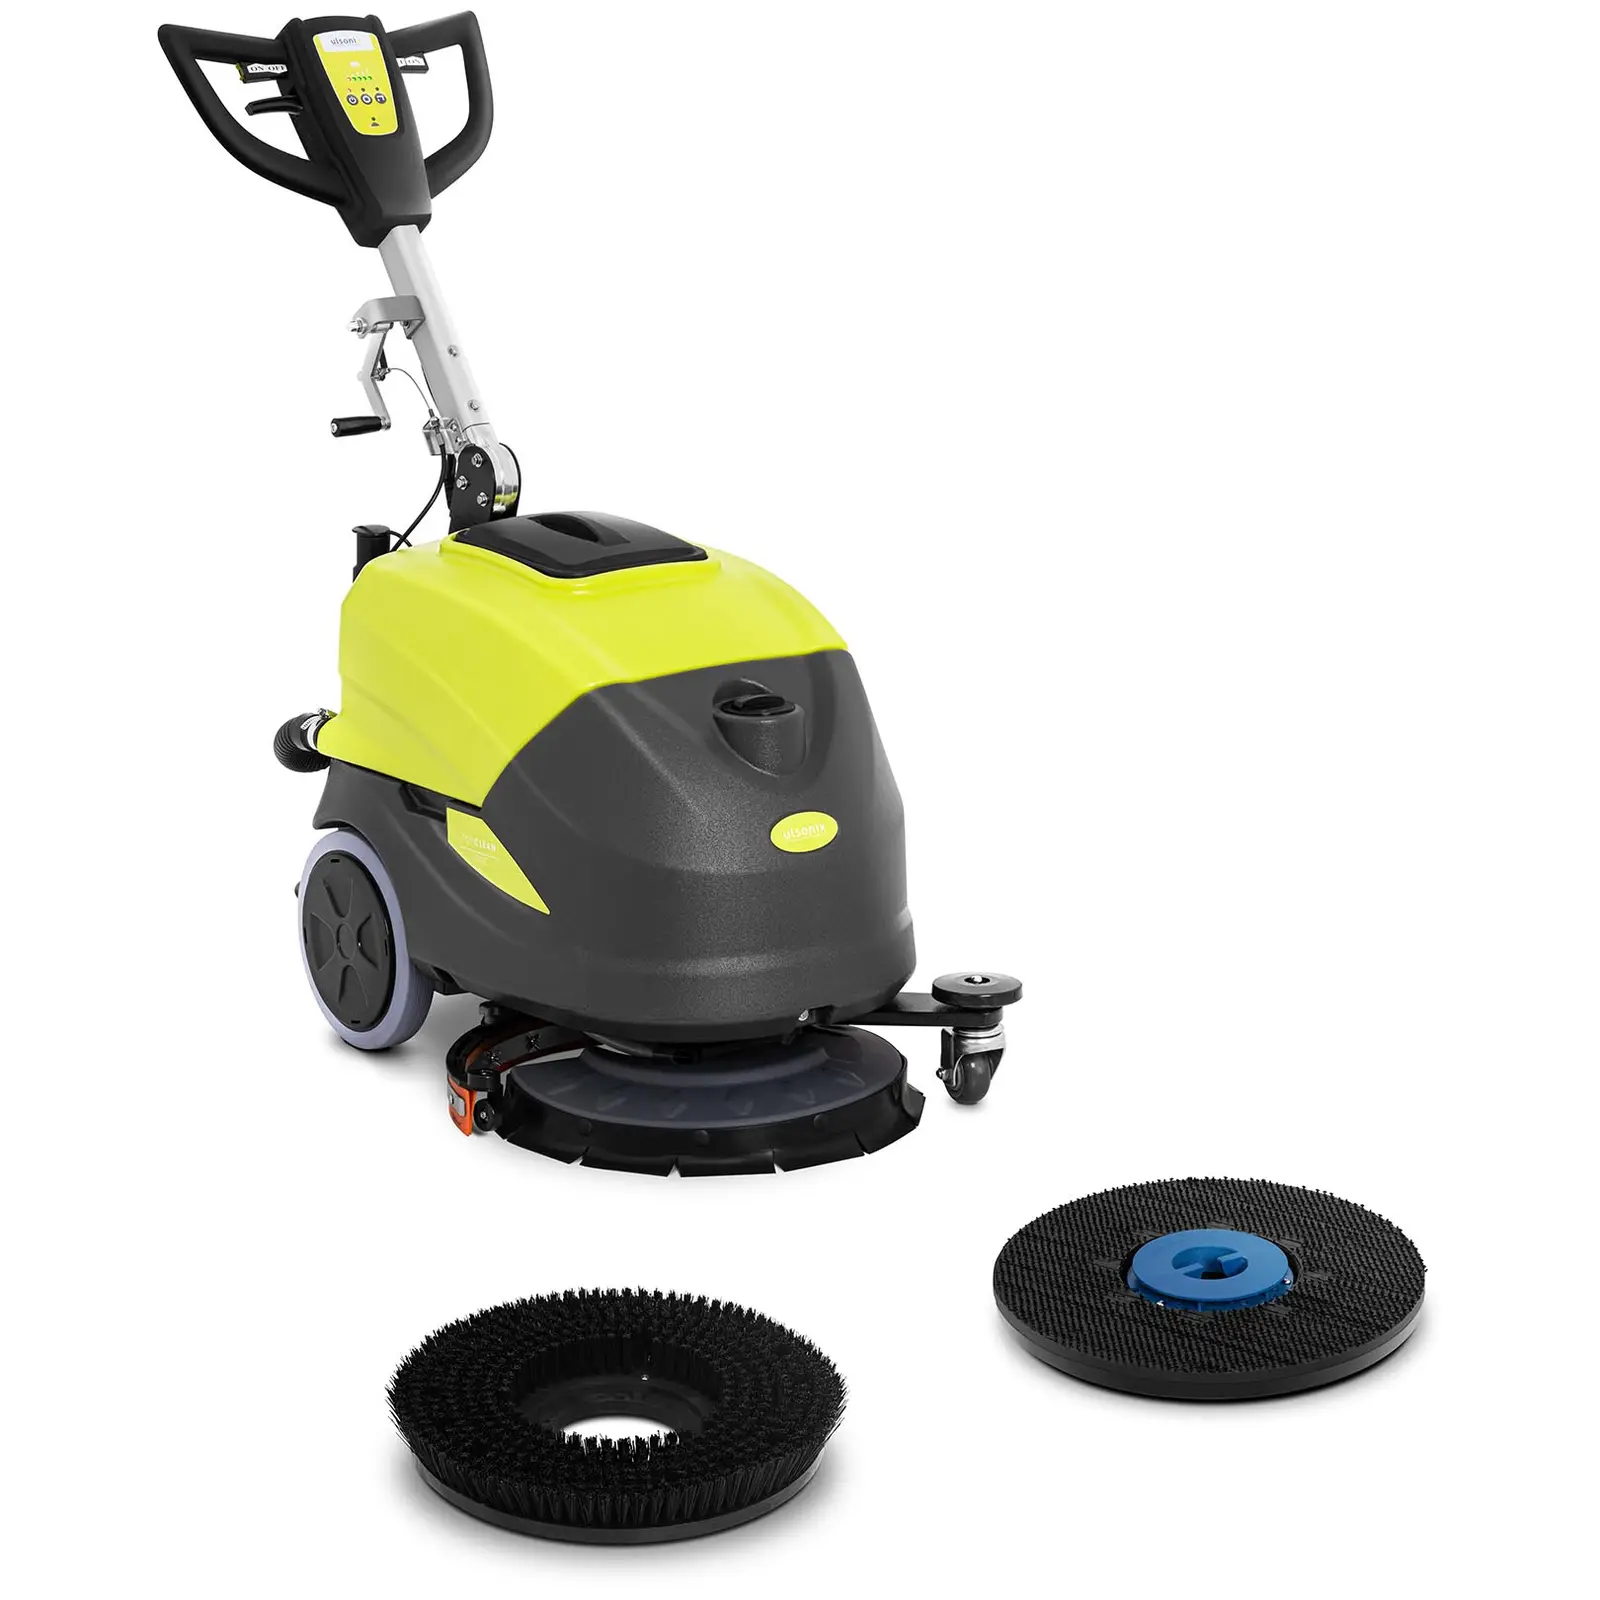 Cordless Floor Scrubber Cleaner - 45.5 cm - 1,450 m2/hr